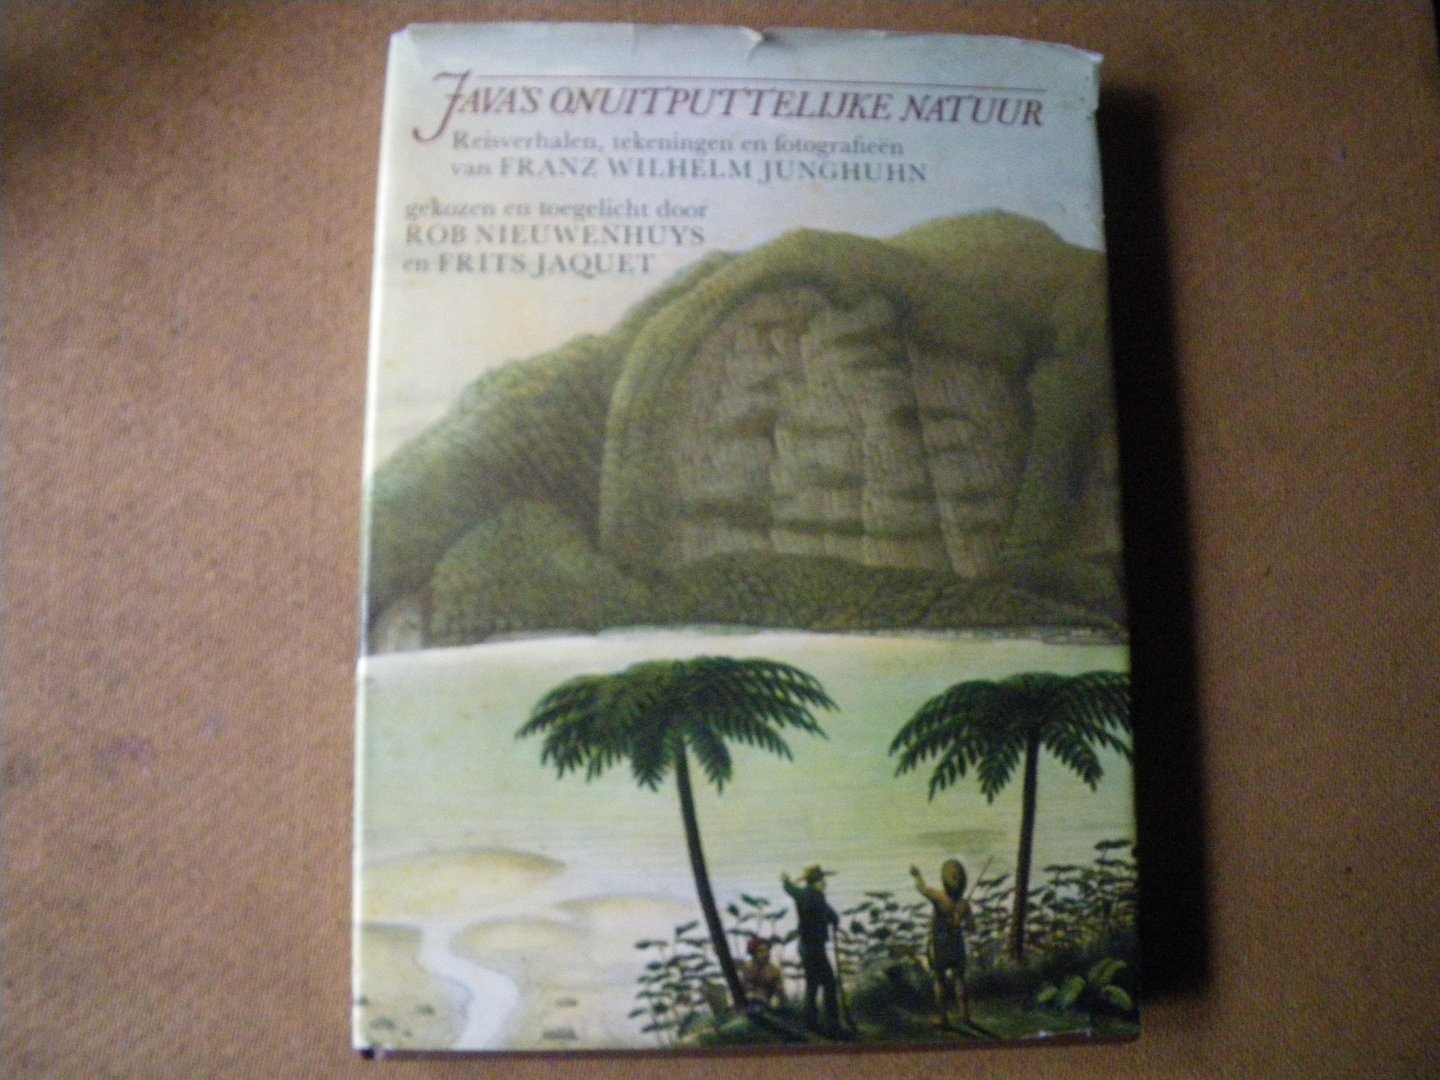 Franz Wilhelm Junghuhn; Rob Nieuwenhuys en Frits Jacquet (samenstelling) - Java's onuitputtelijke natuur Reisverhalen, tekeningen en fotografieen van Franz Wilhelm Junghuhn